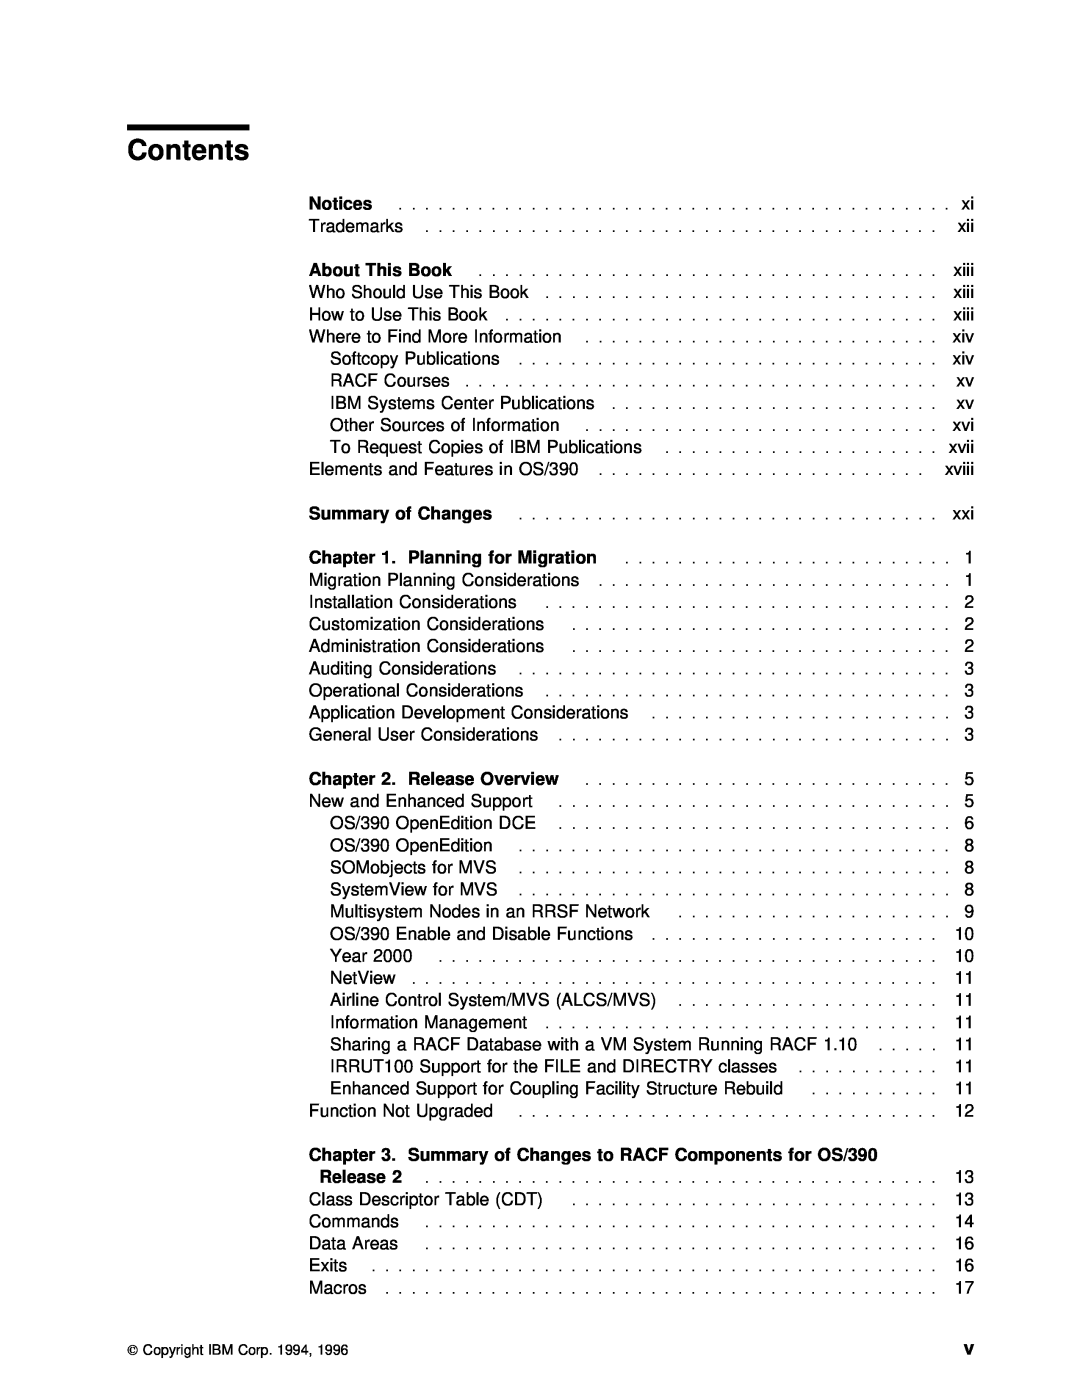 IBM GC28-1920-01 manual Contents, Migration 